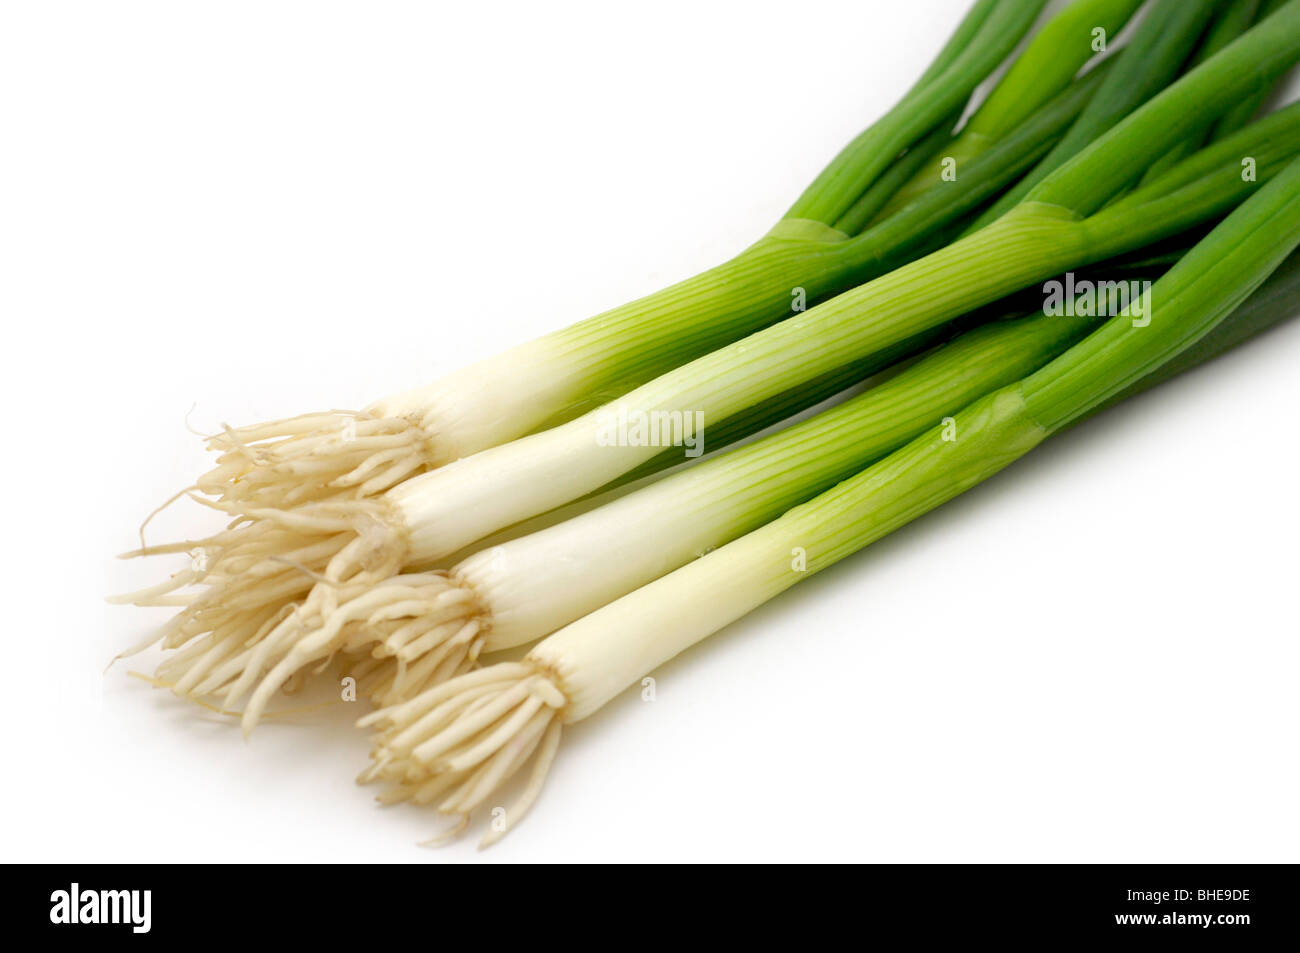 Green/Spring Onion Stock Photo